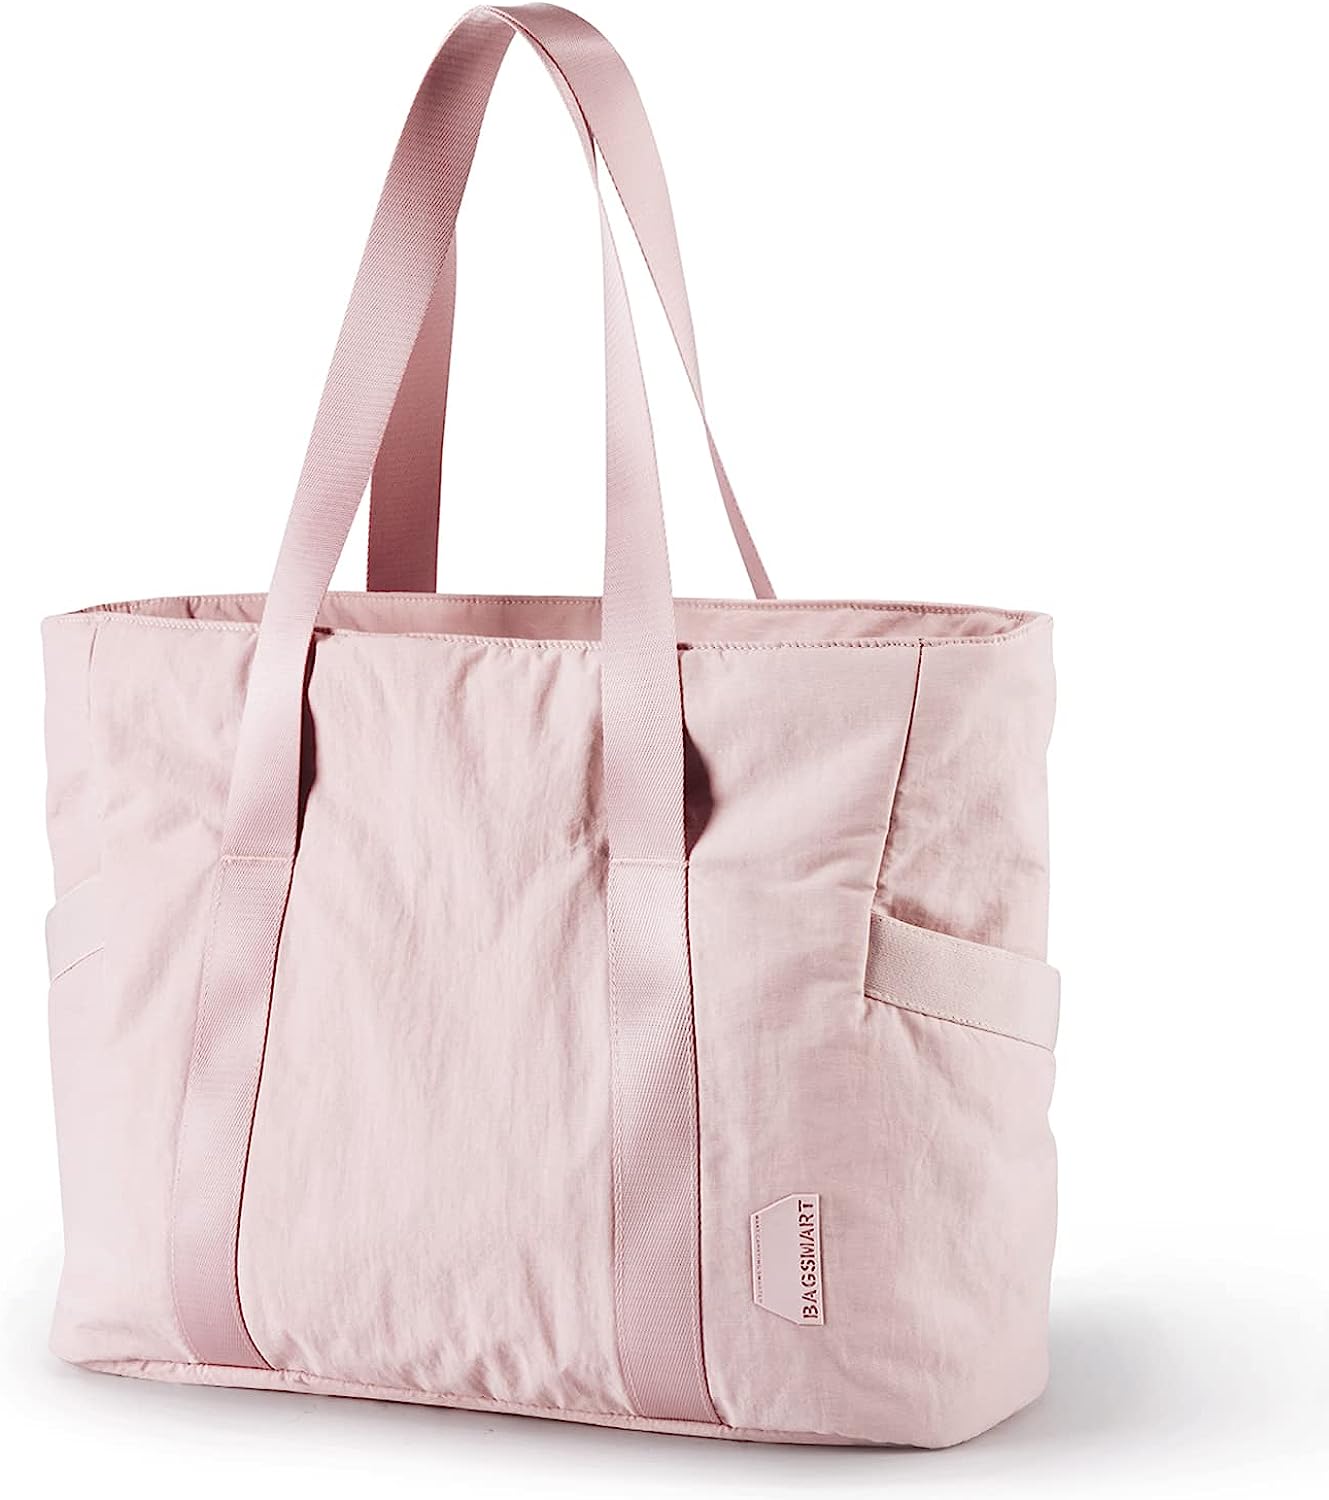 BAGSMART Women Tote Bag Large Shoulder Bag Top Handle [...]